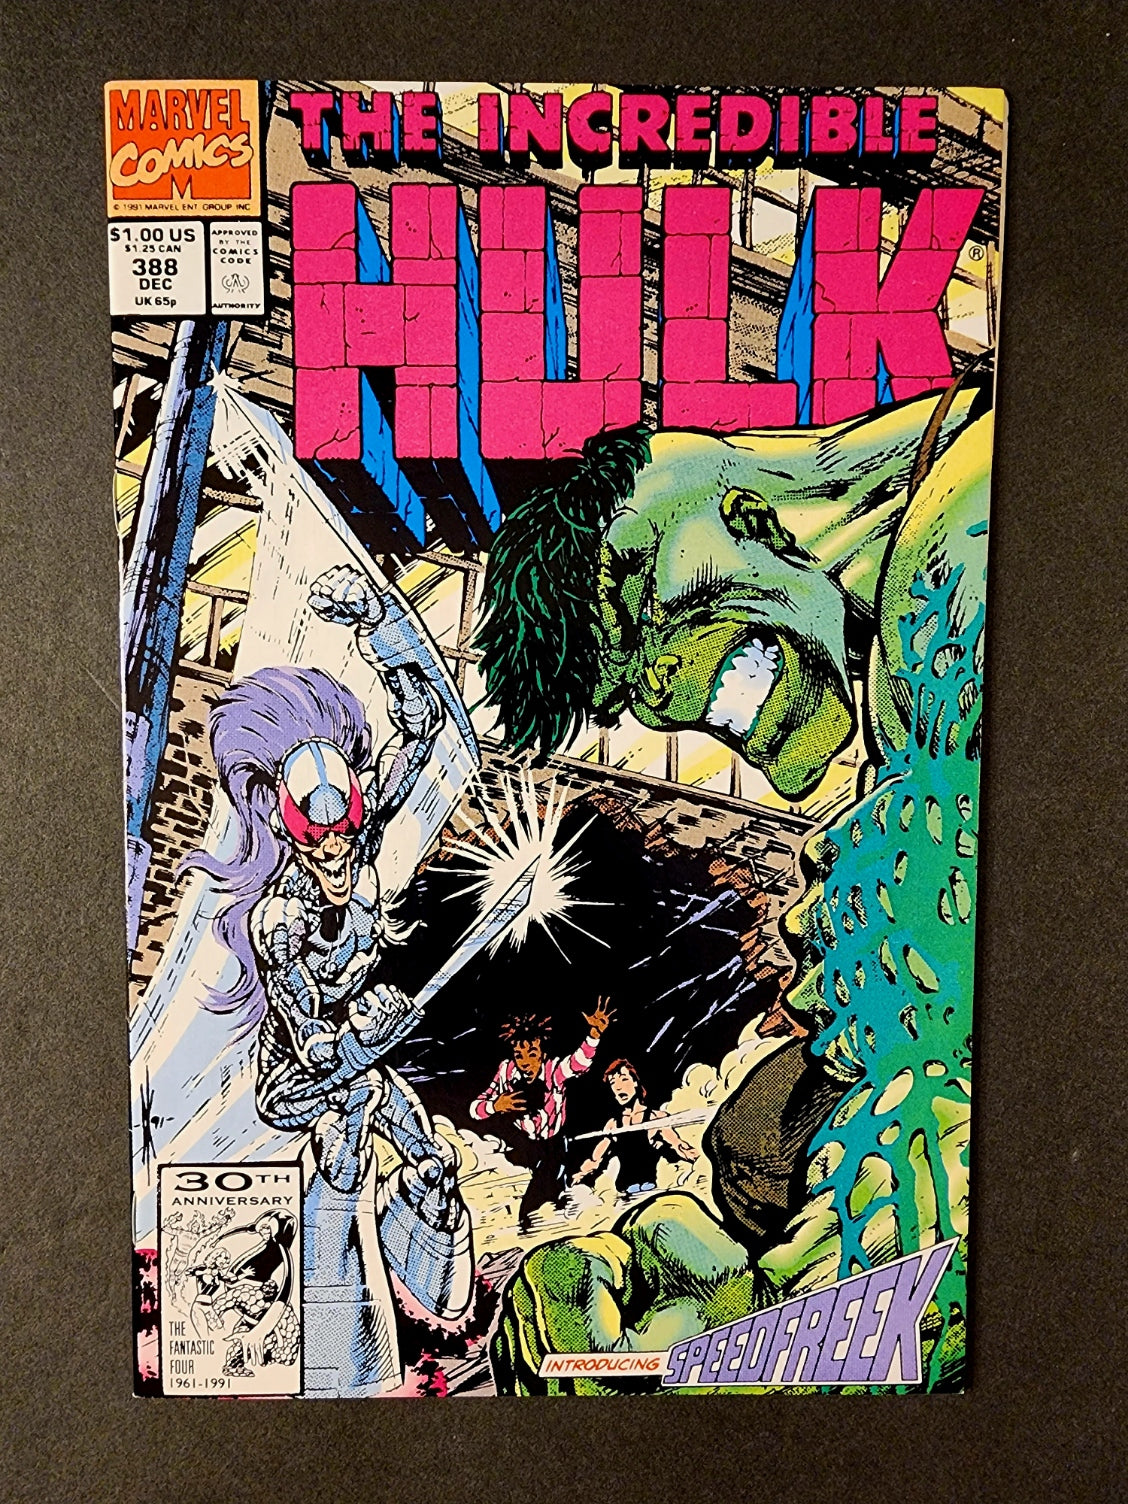 The Incredible Hulk #388 (VF)